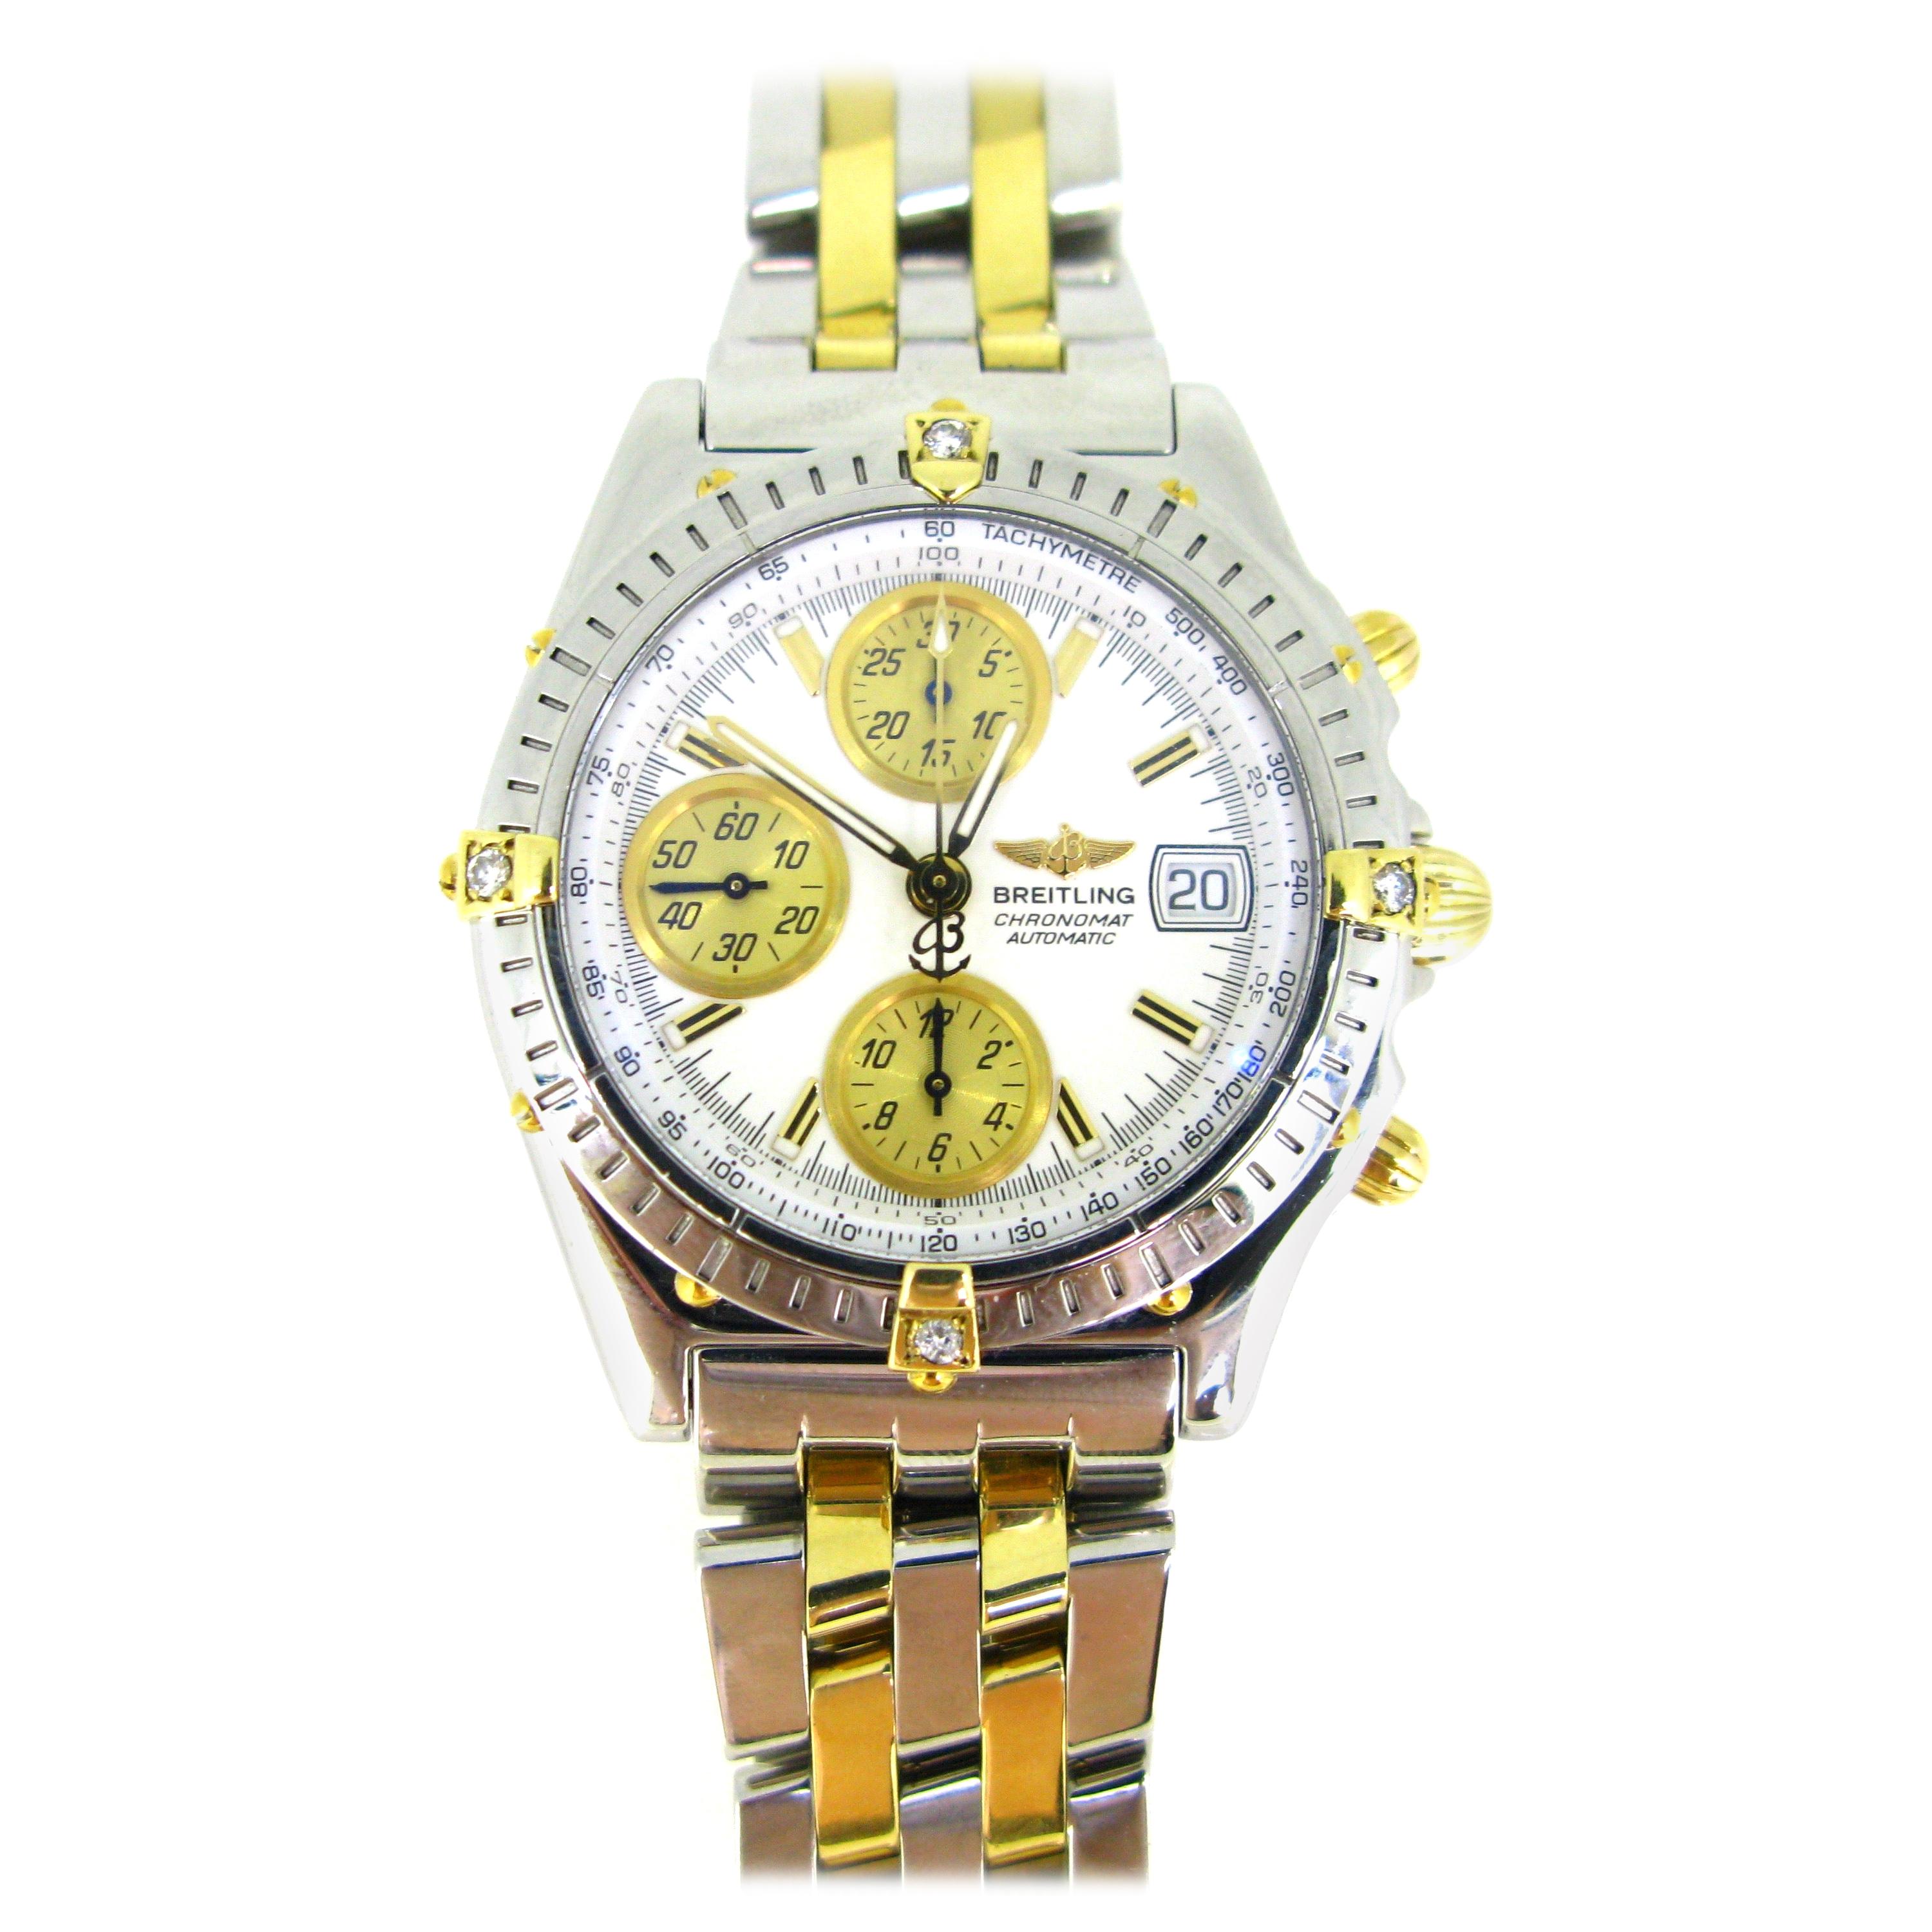 Certified Breitling Chronomat B13050 Yellow Gold Stainless Steel Diamonds Watch